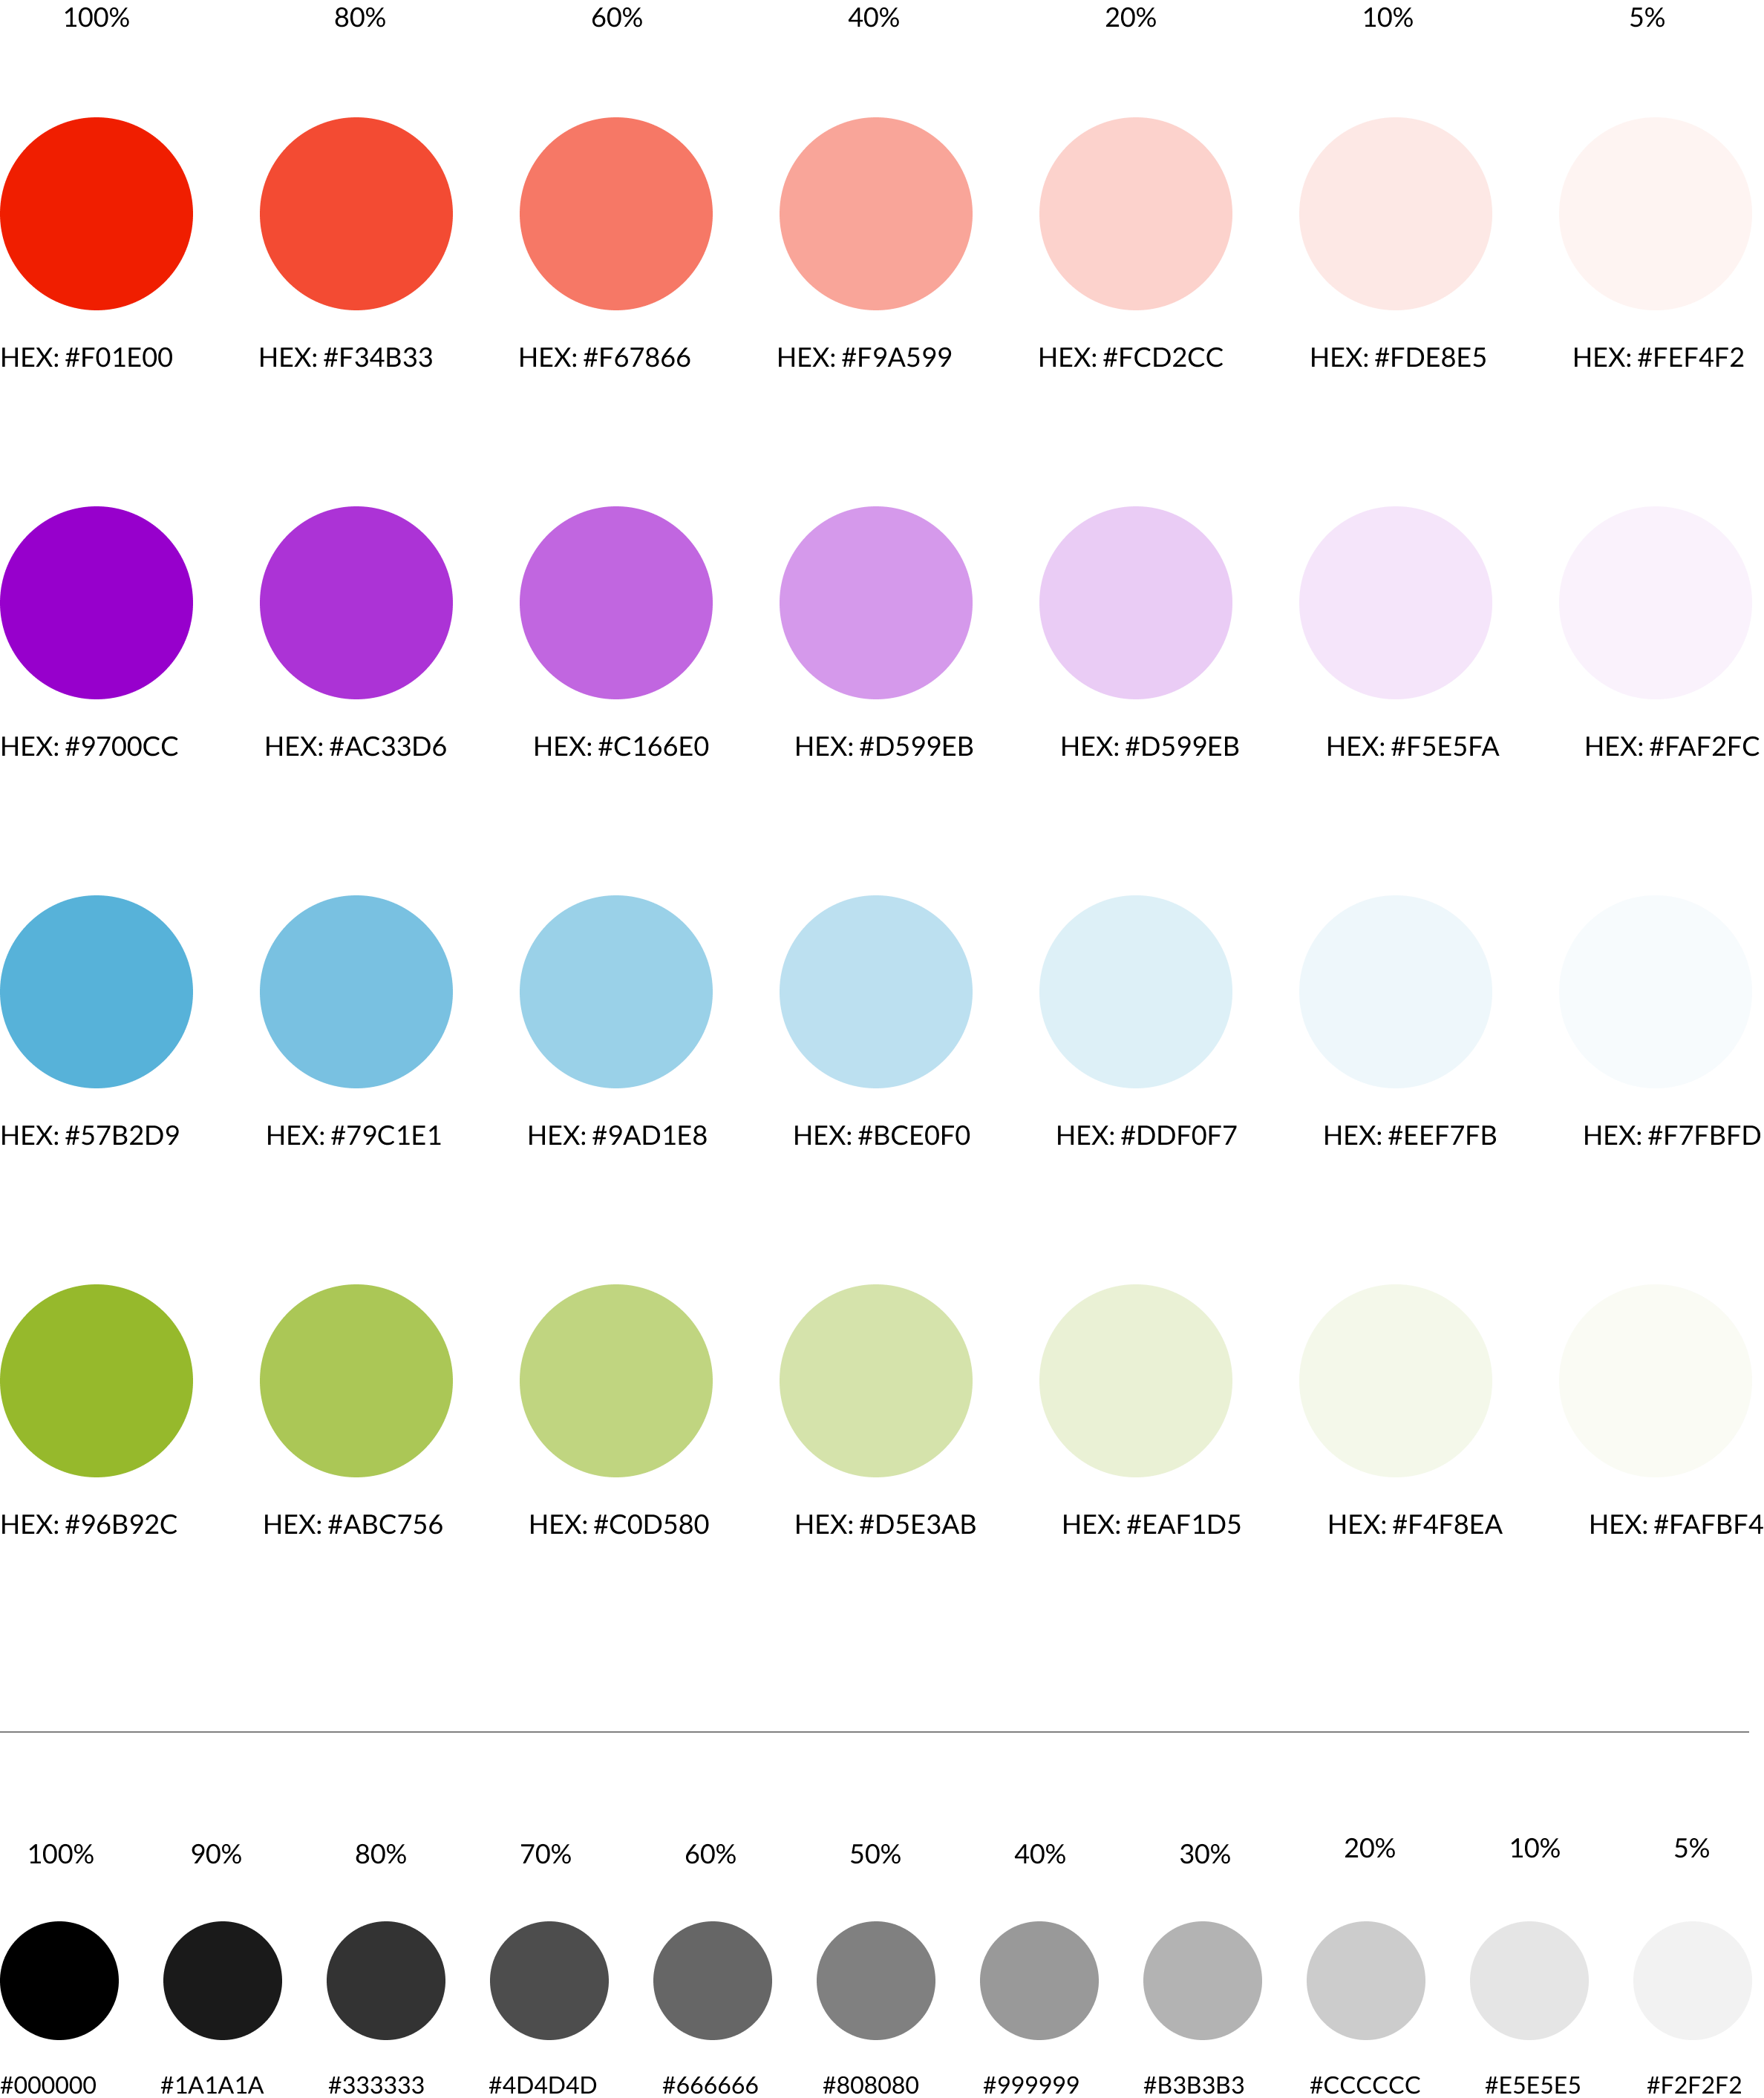 UMO:s färger i olika toningar